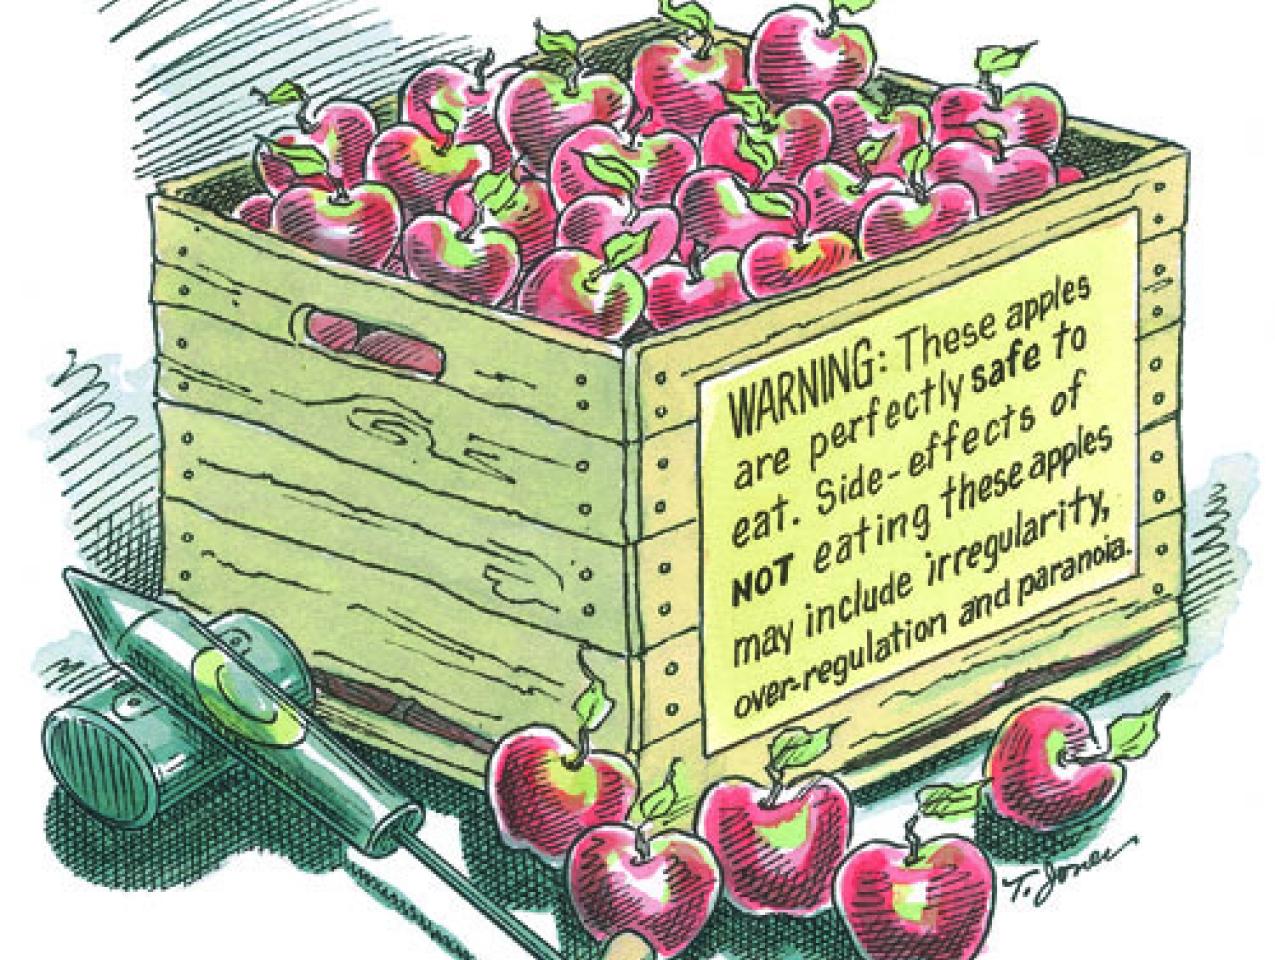 rotten apples